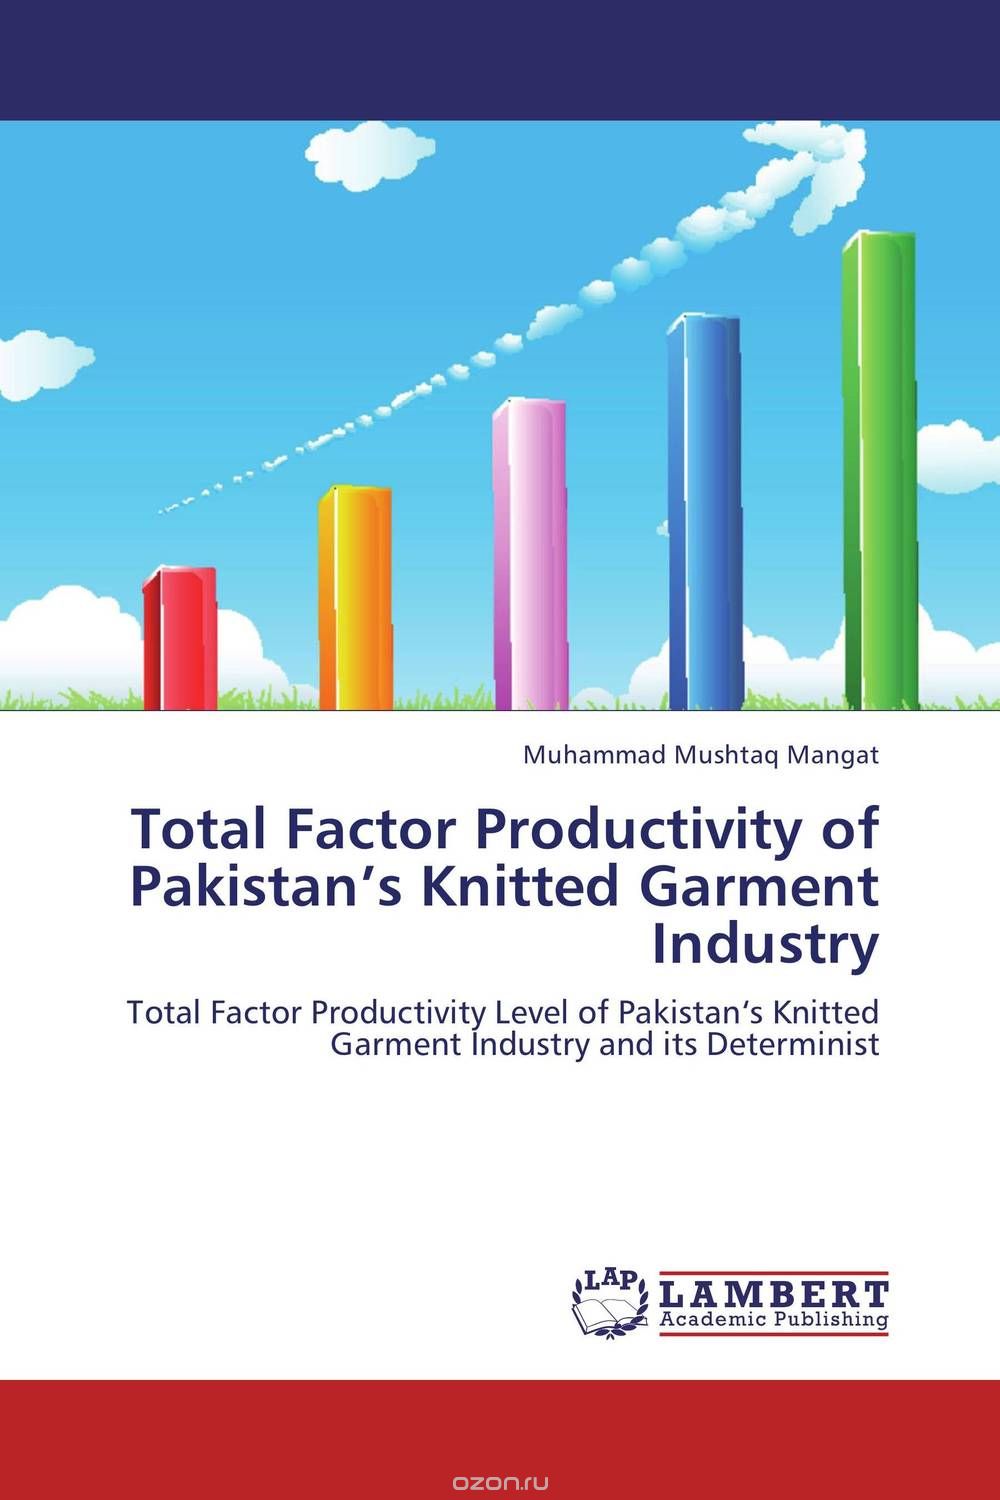 Скачать книгу "Total Factor Productivity of Pakistan’s Knitted Garment Industry"